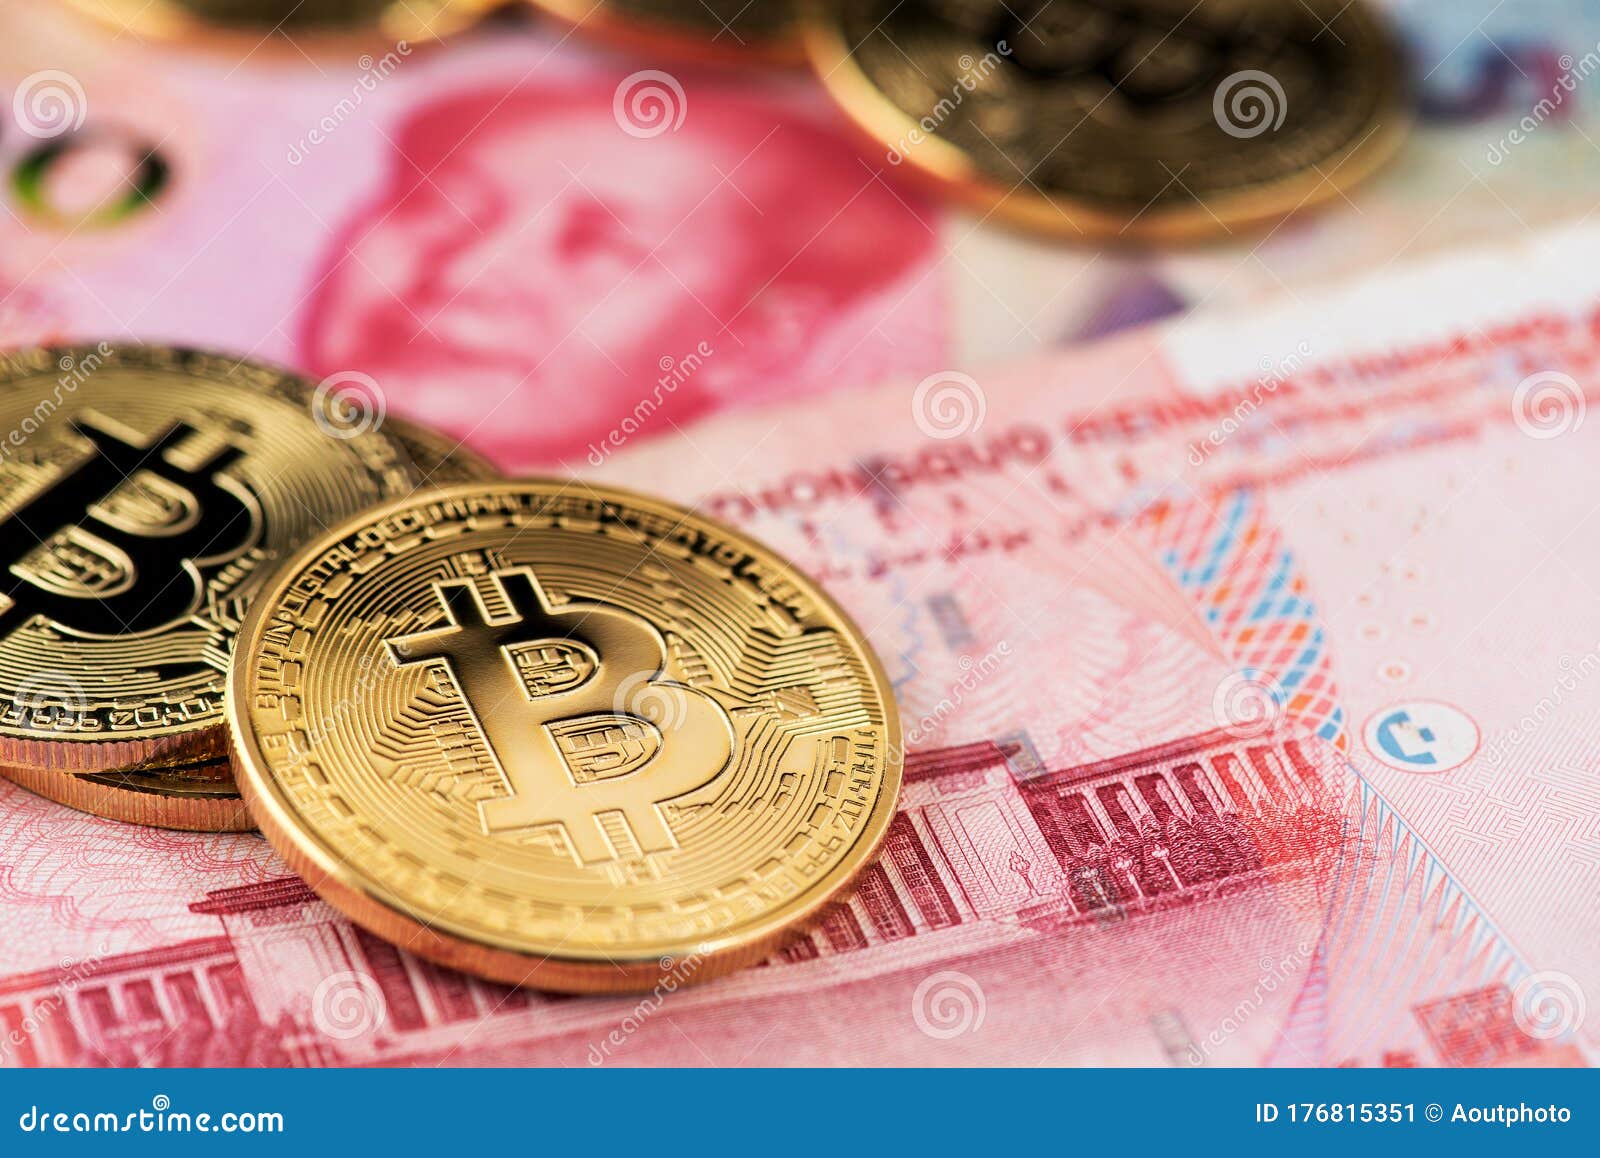 China Yuan Banknotes And Bitcoin Cryptocurrency Coins ...